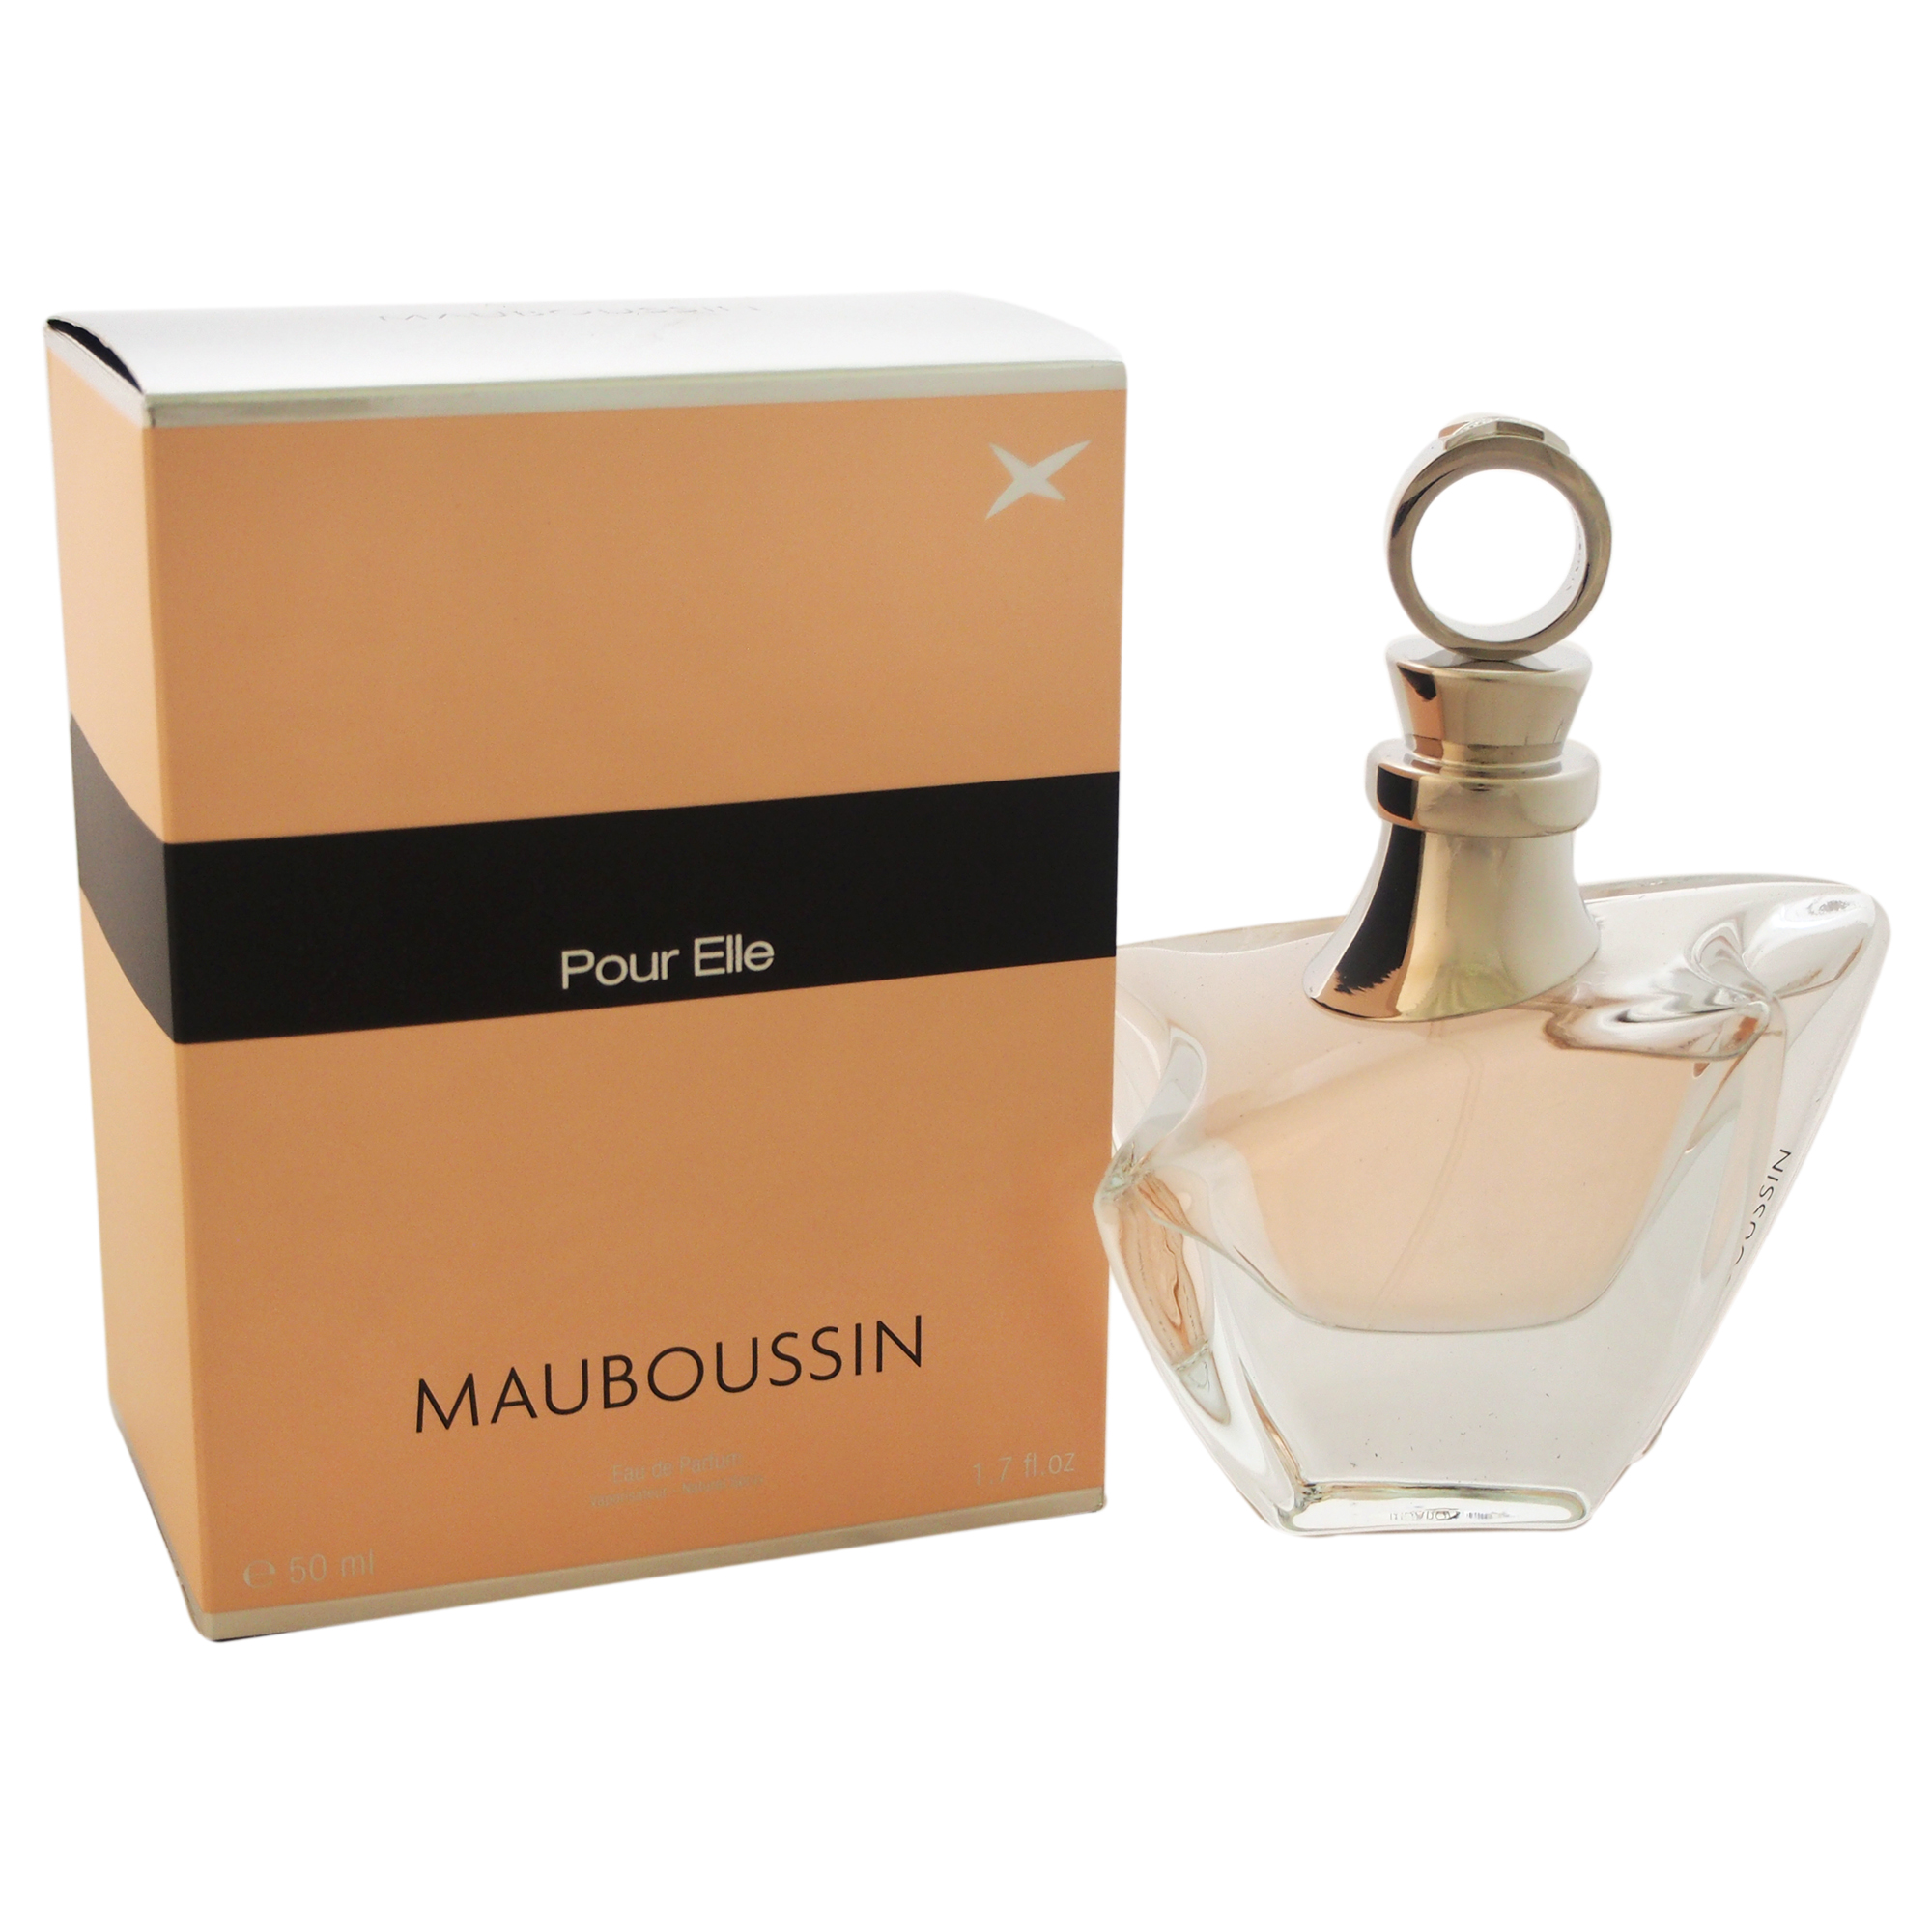 MAUBOUSSIN POUR ELLE by Mauboussin for Women - 1.7 oz EDP Spray